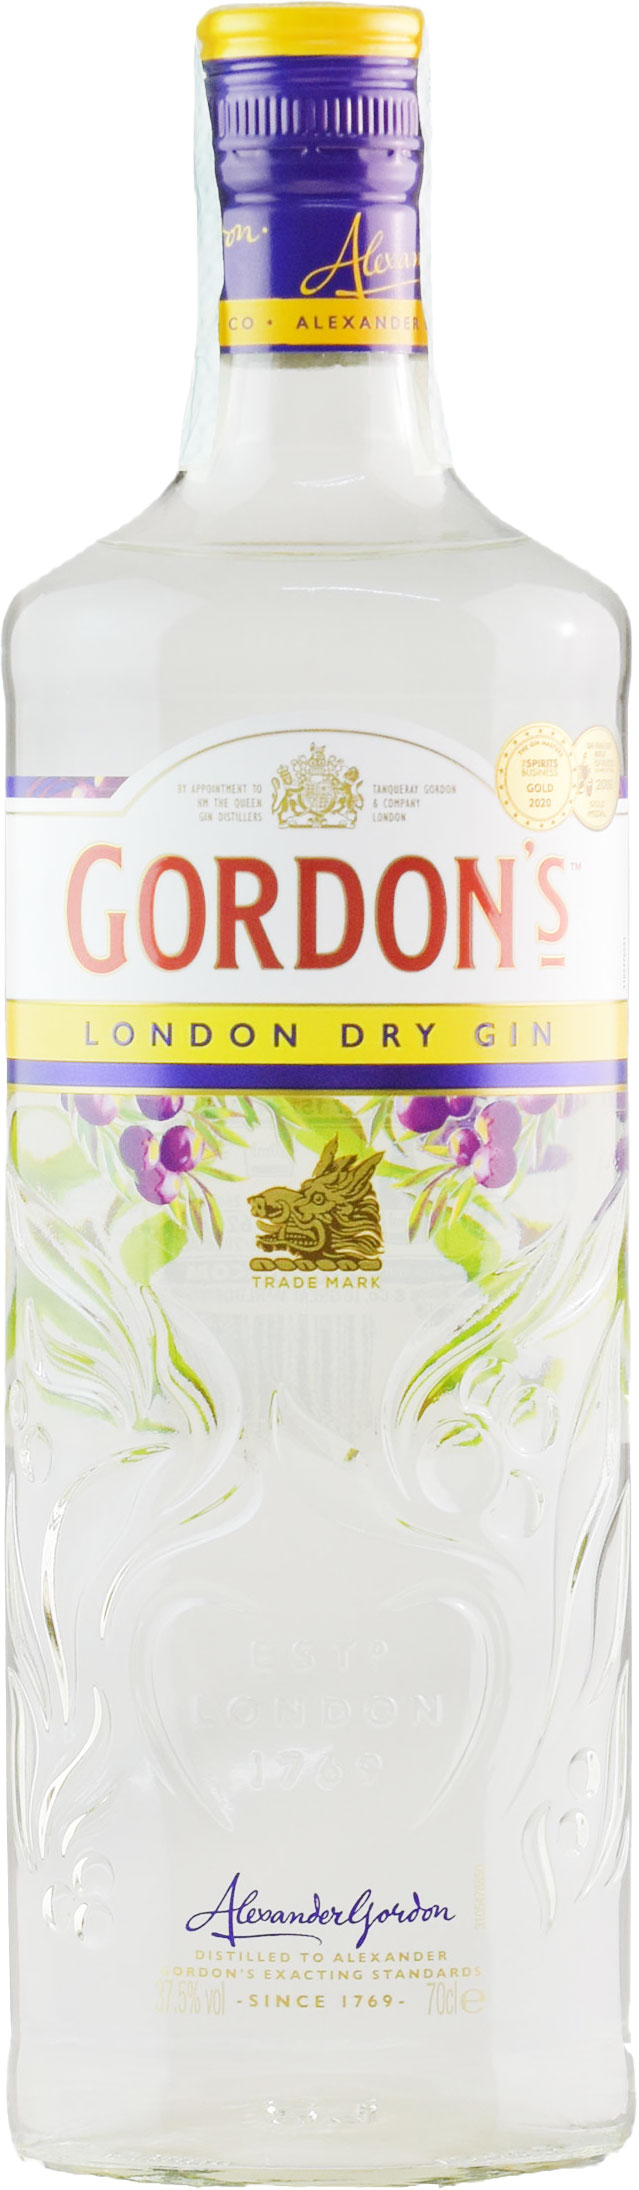 Gordon%27s London Dry Gin 0.7L